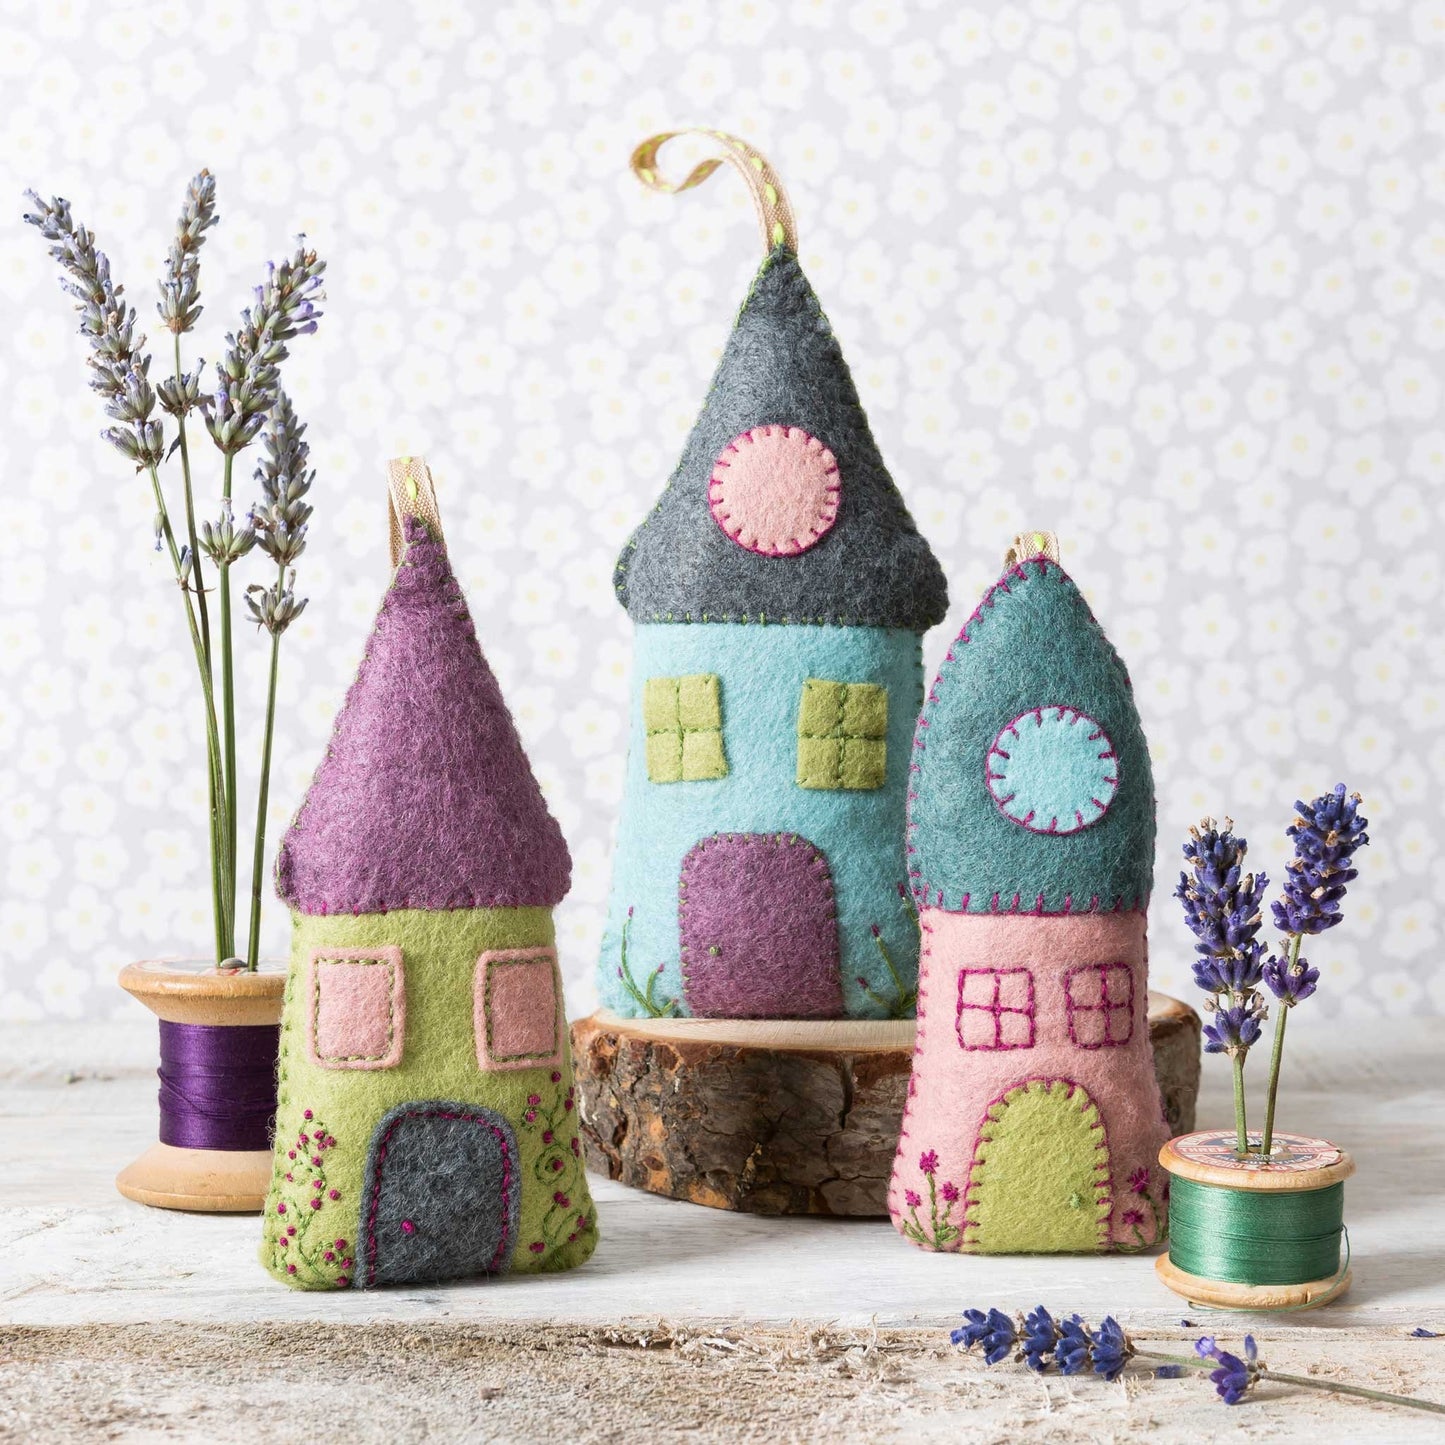 Felt Lavender Houses Sewing Craft Kit